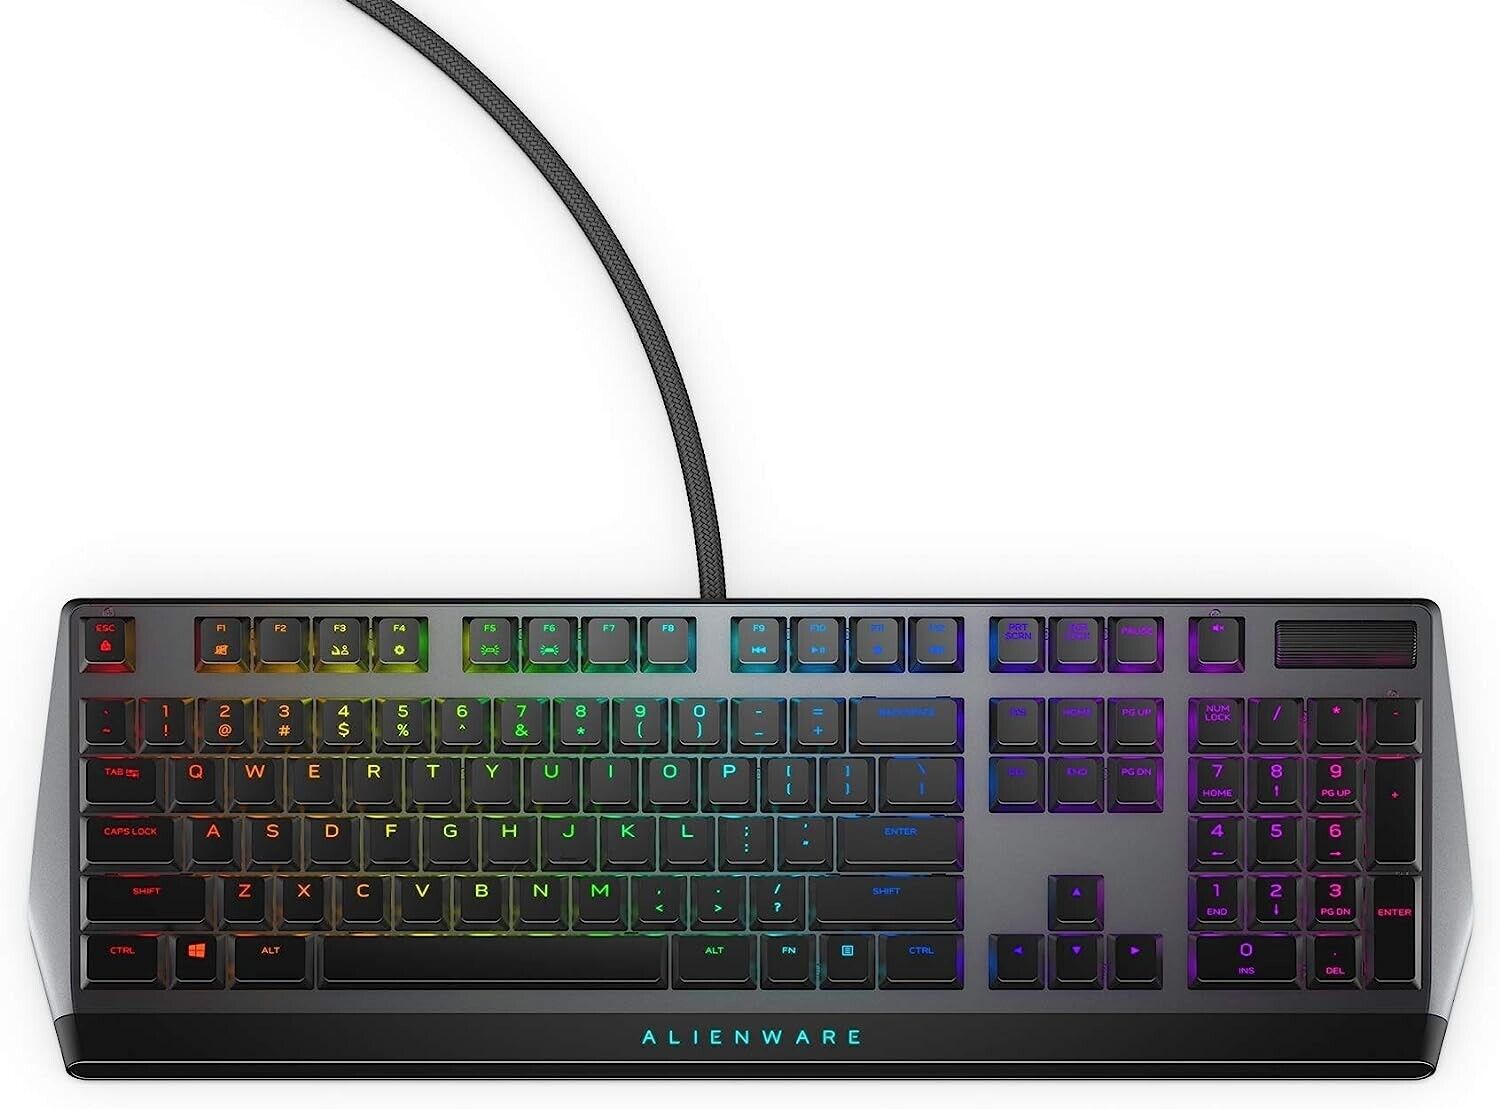 Alienware Low-Profile RGB Gaming Keyboard AW510K: AlienFX Per Key RGB LED